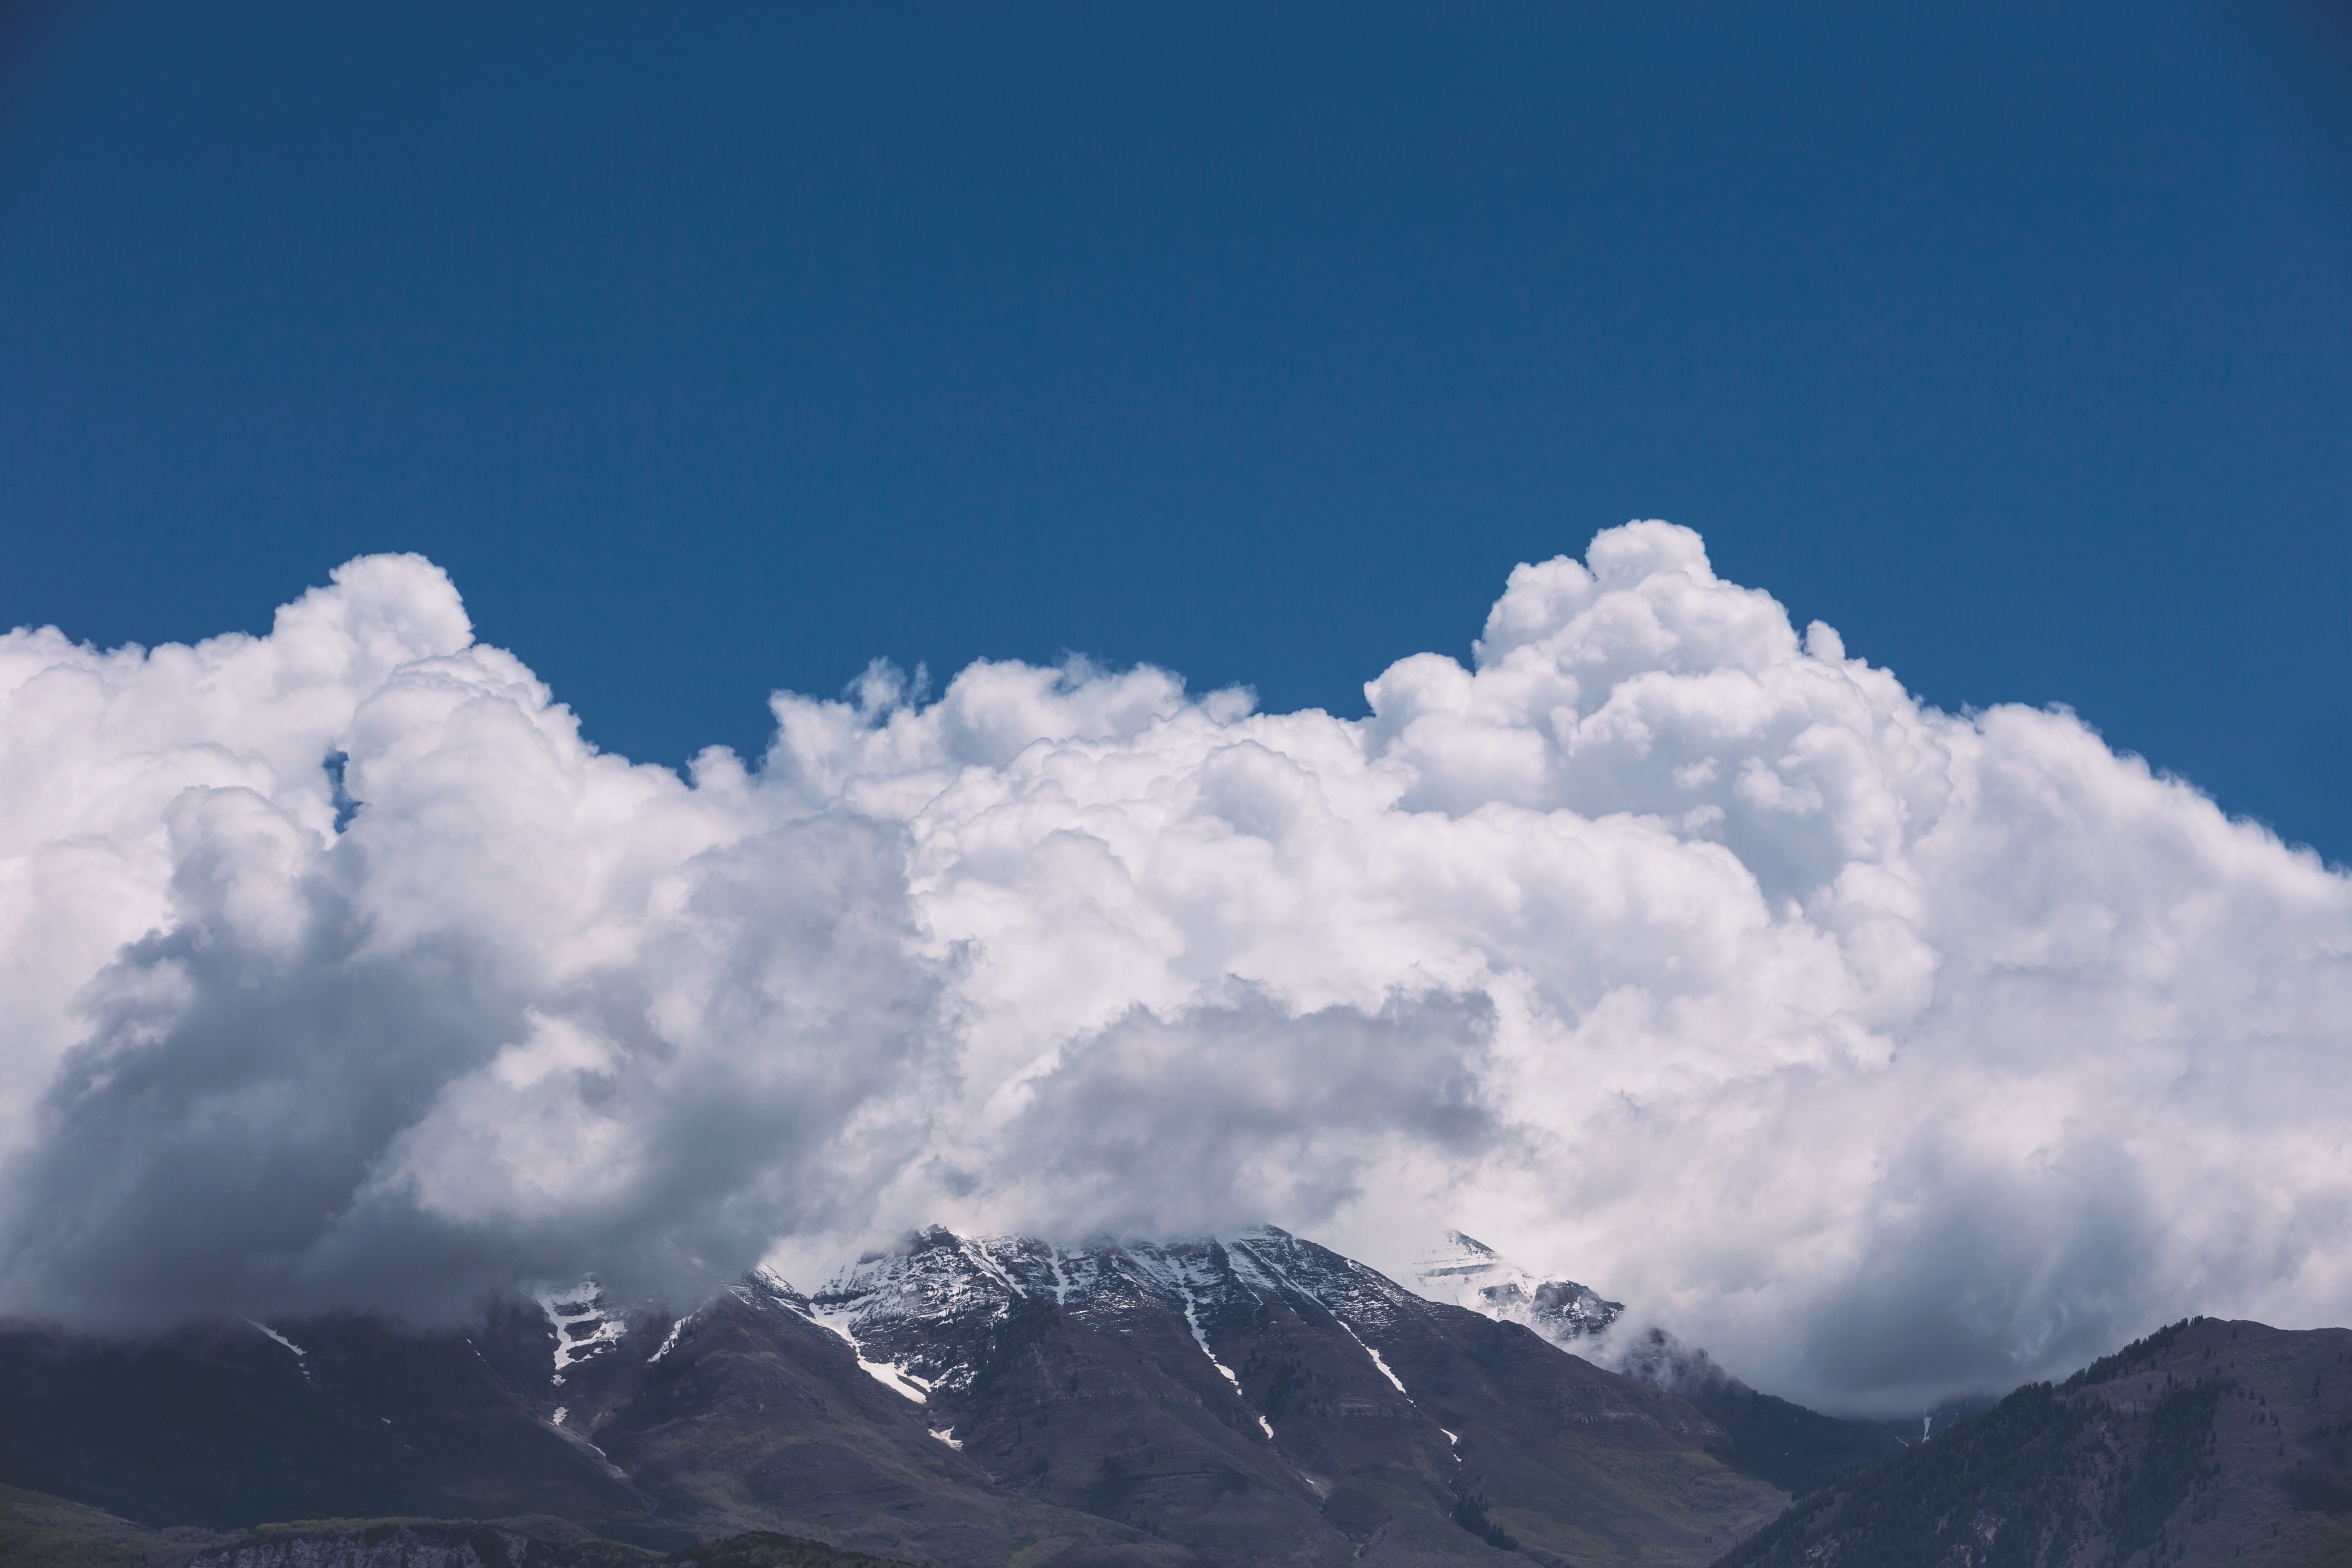 Ms1 g cloud by. Облака. Горы в облаках. Снеговые тучи. Облака над горами.